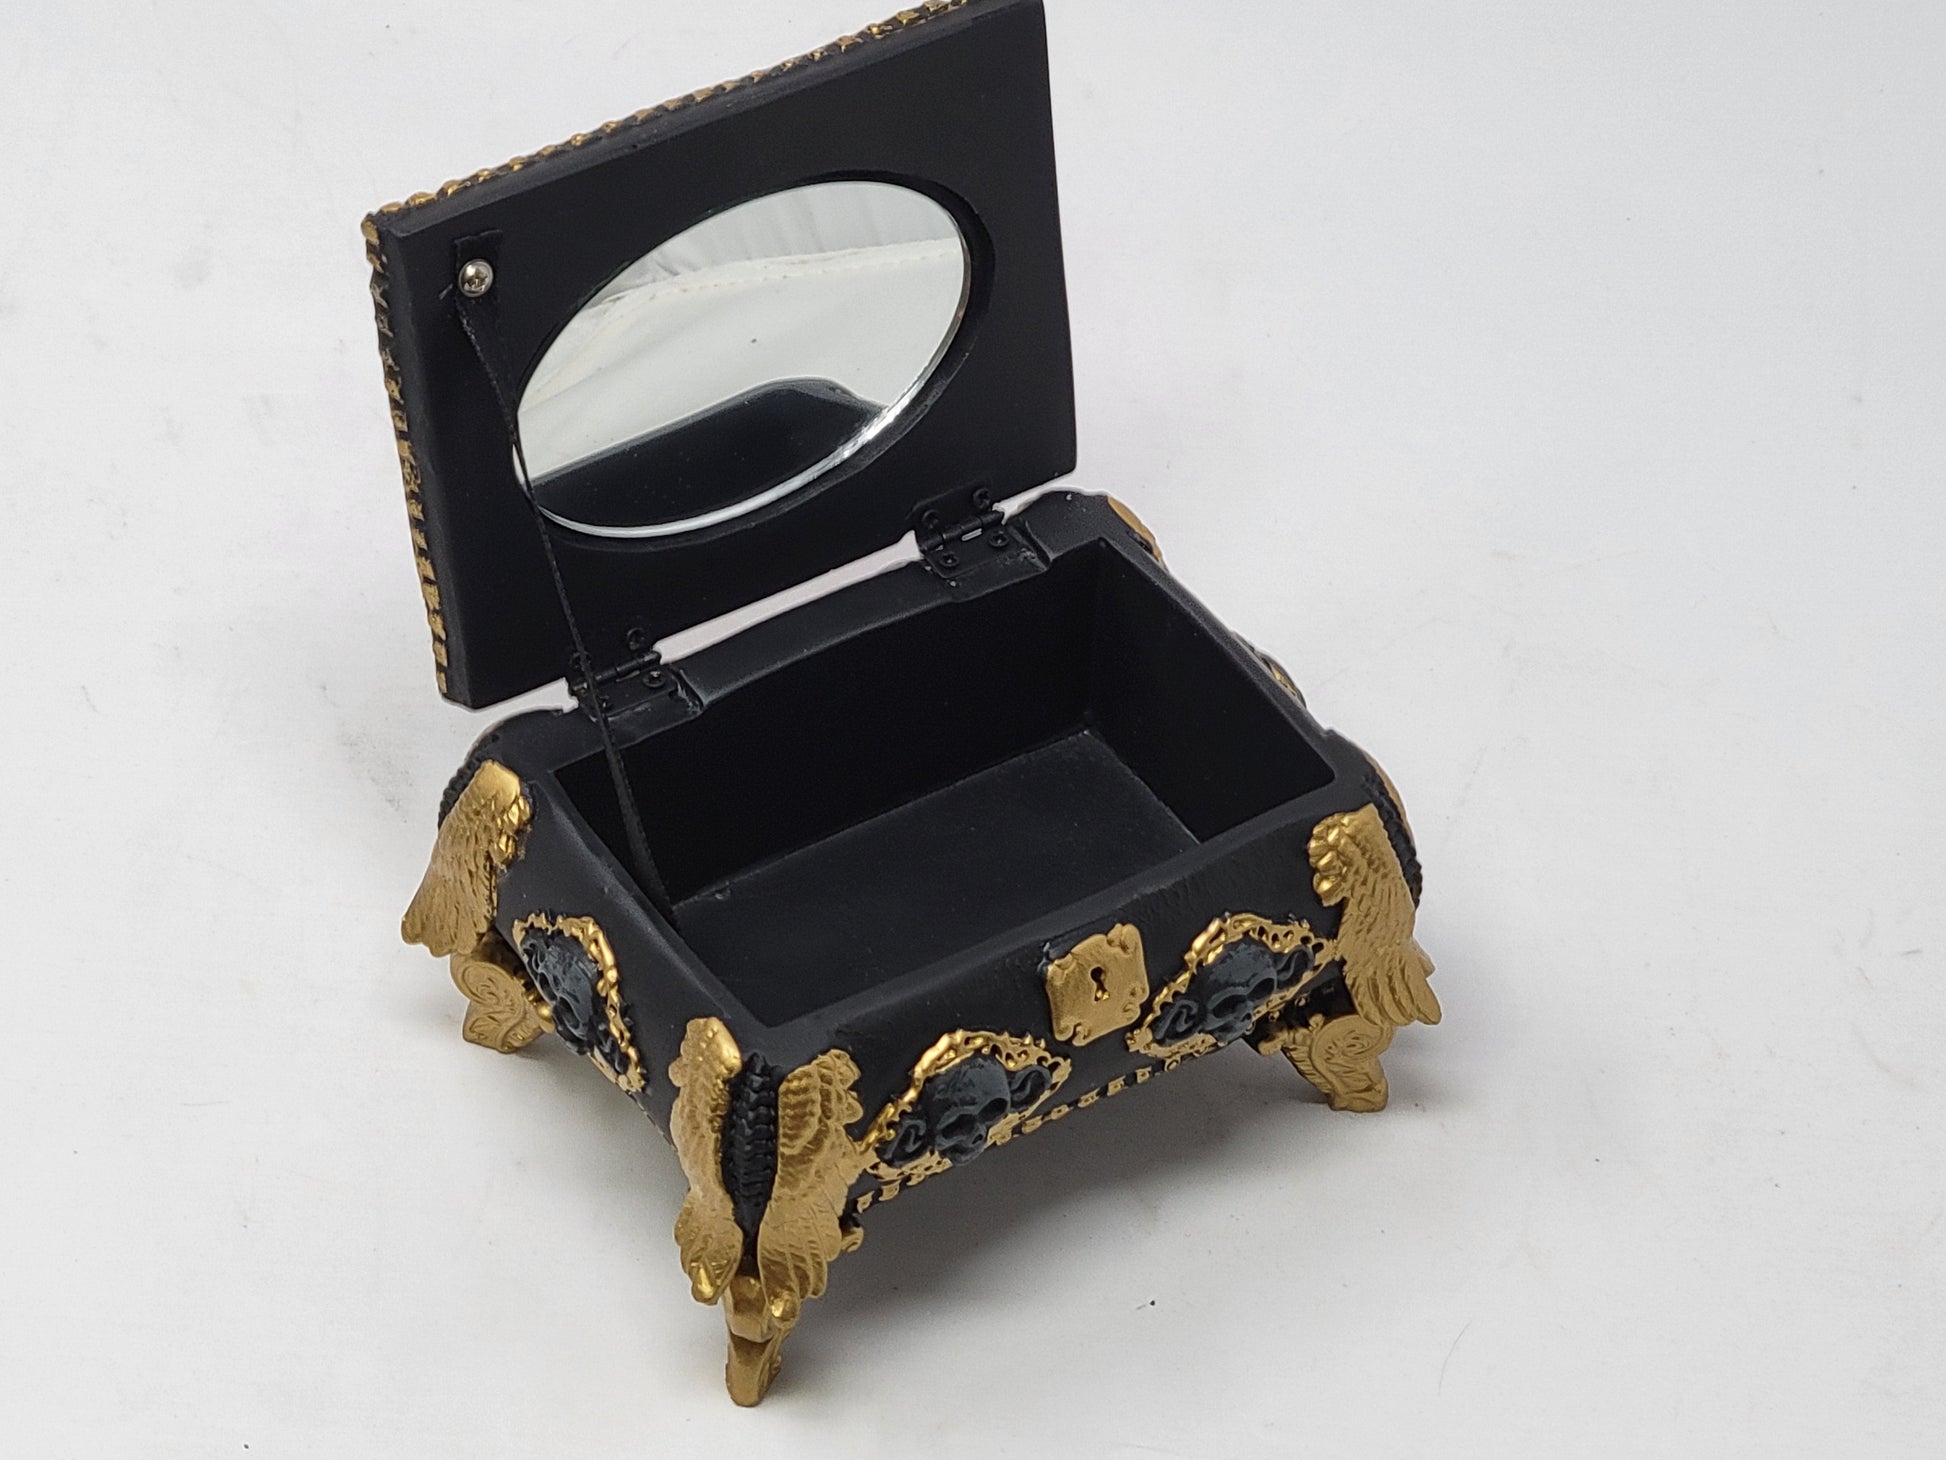 Gold and Black Skull Jewelry Box